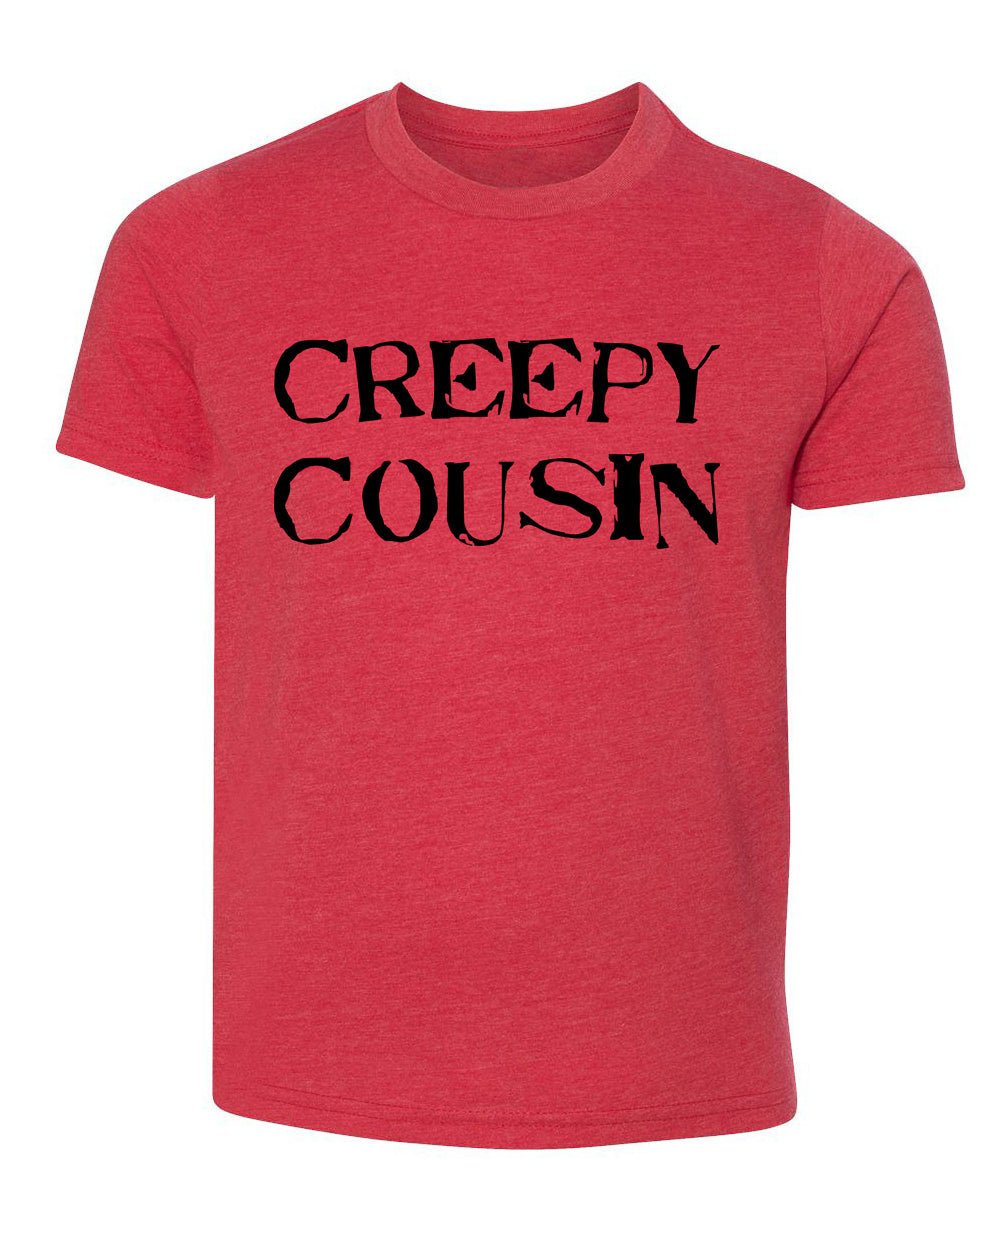 Creepy Cousin Kids T Shirts - Mato & Hash